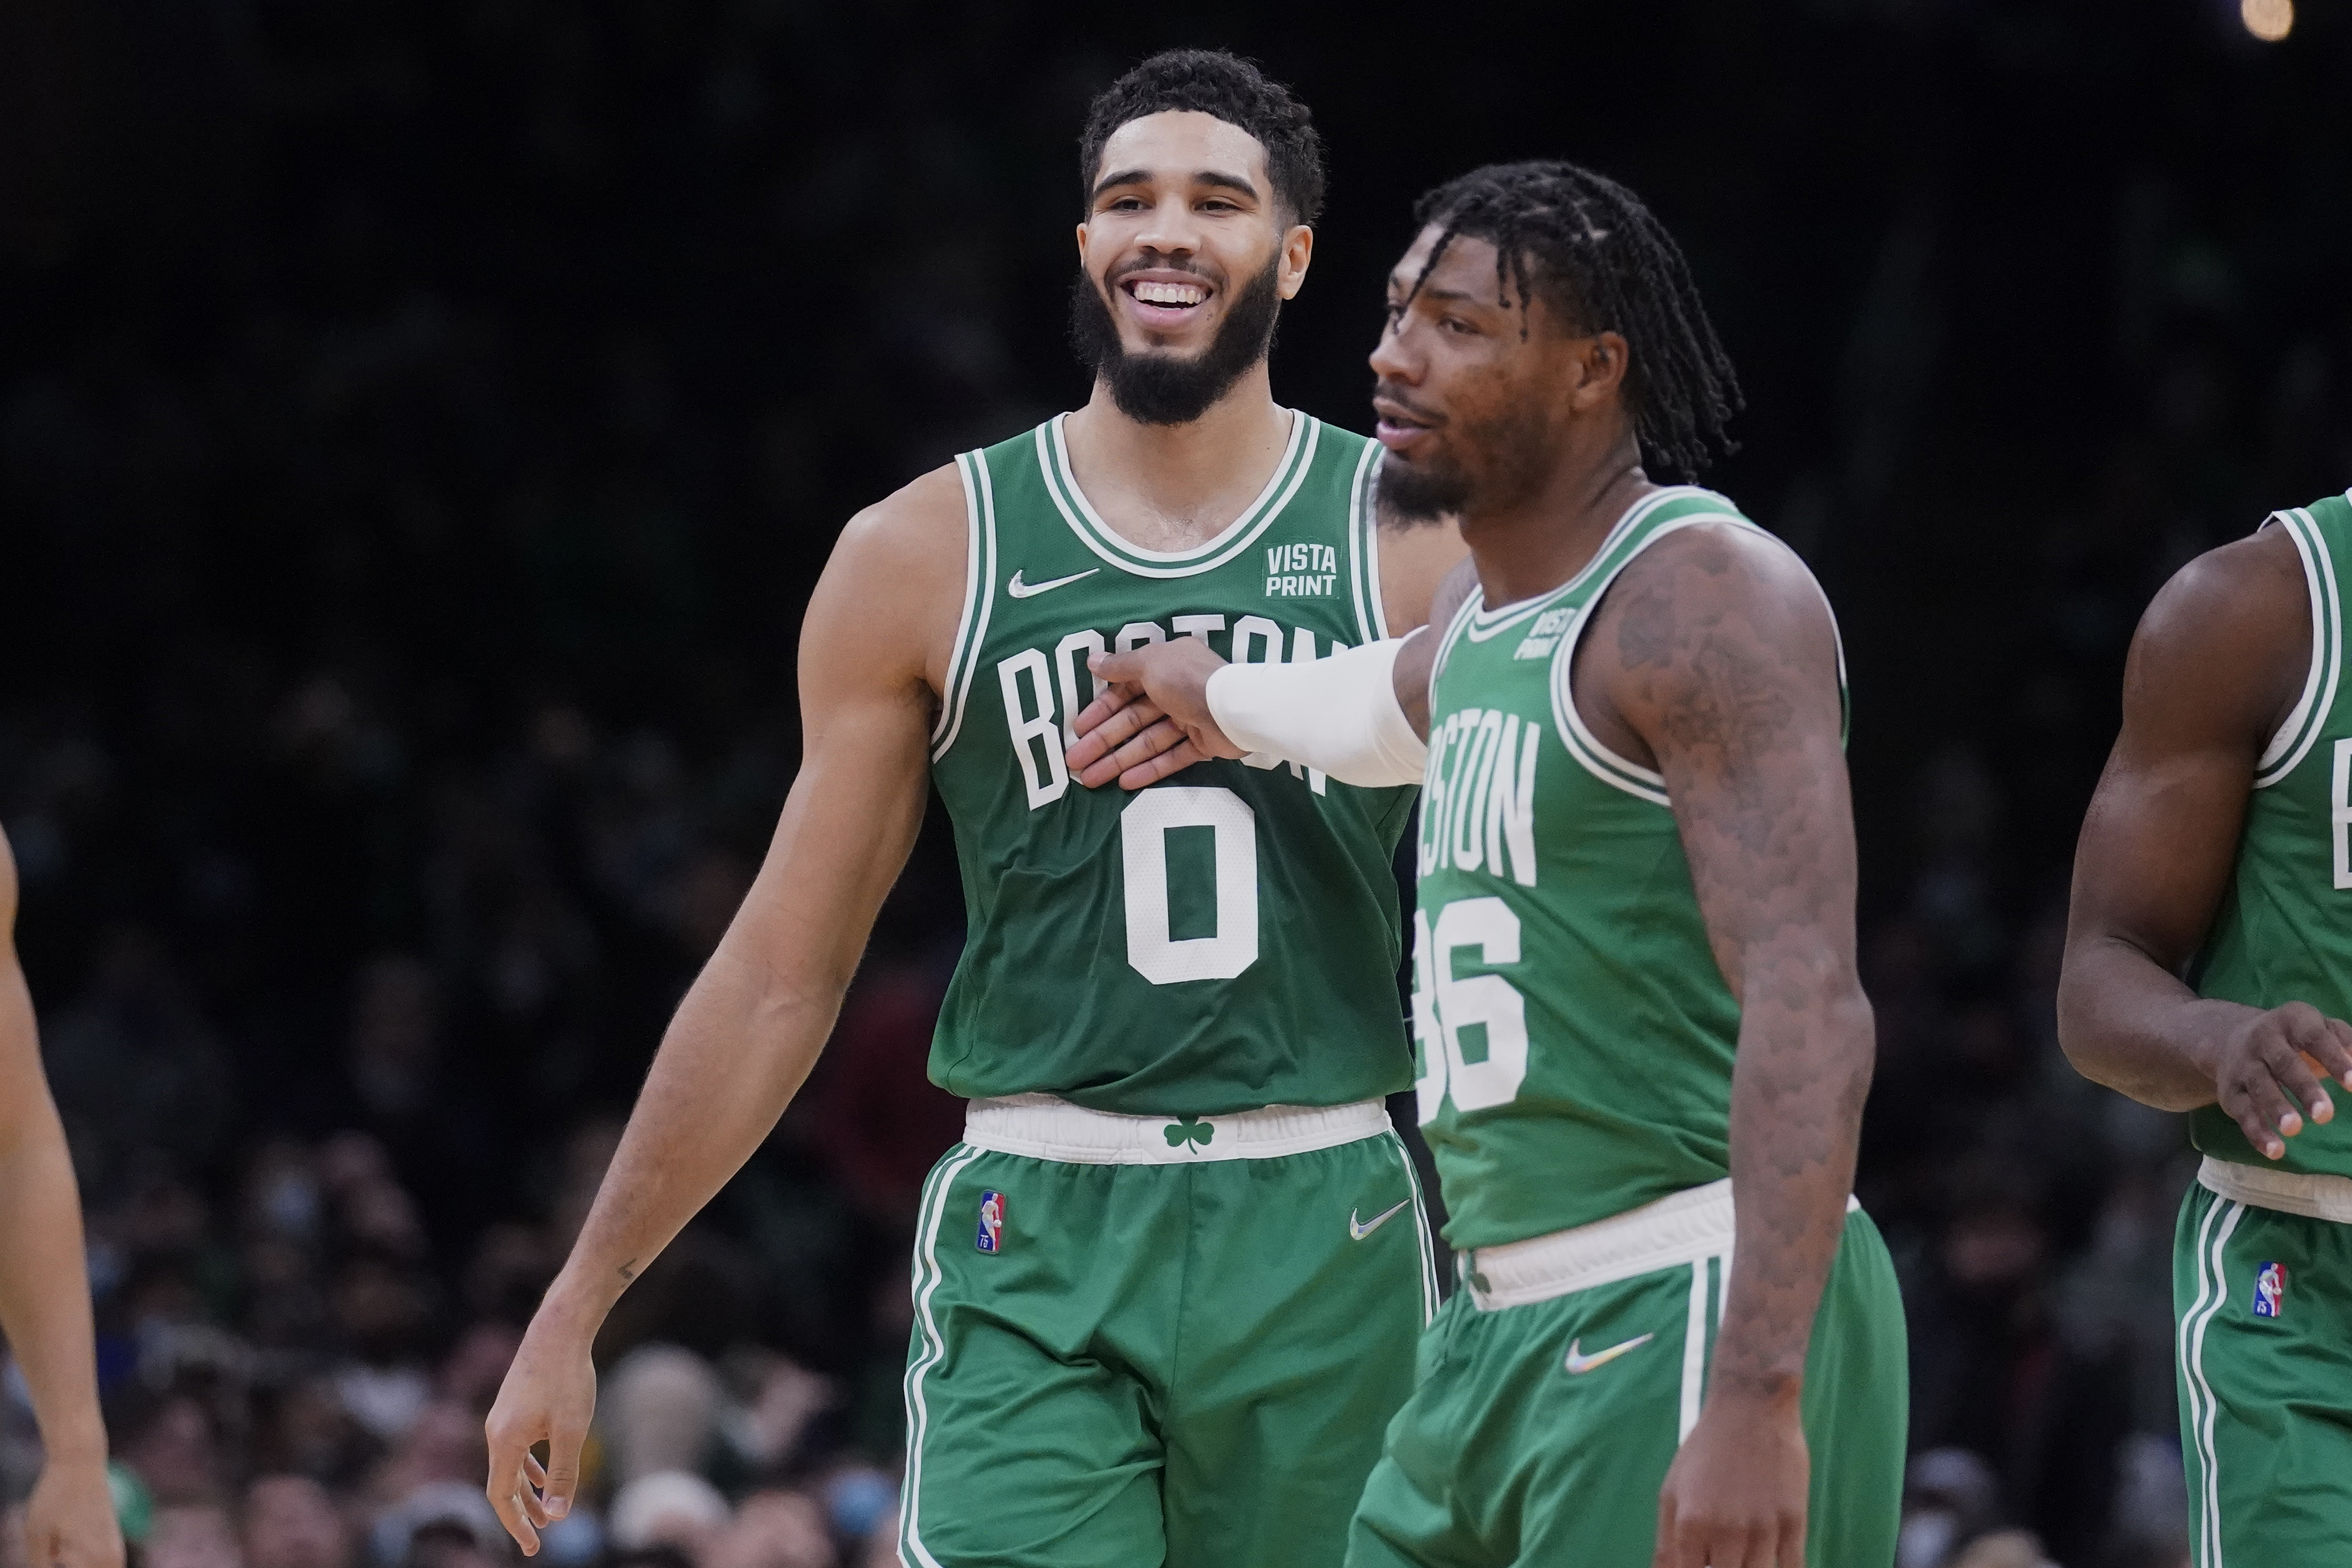 Celtics star Marcus Smart explains why Jaylen Brown is no longer